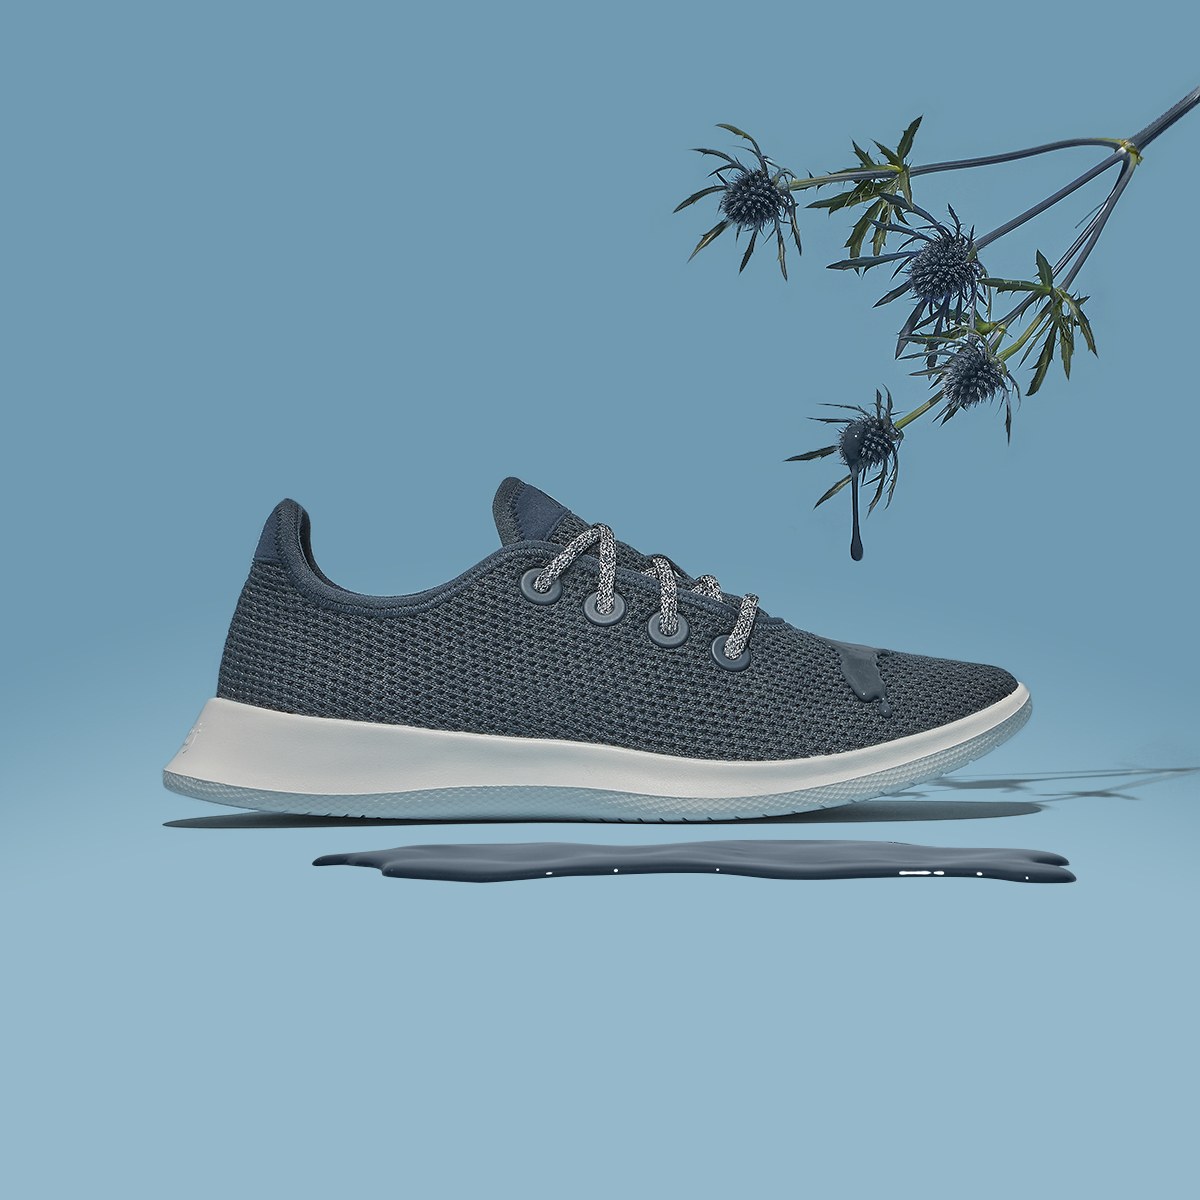 Eco Fashion: Έχεις δει αυτά τα sneakers που είναι φτιαγμένα από δέντρα;